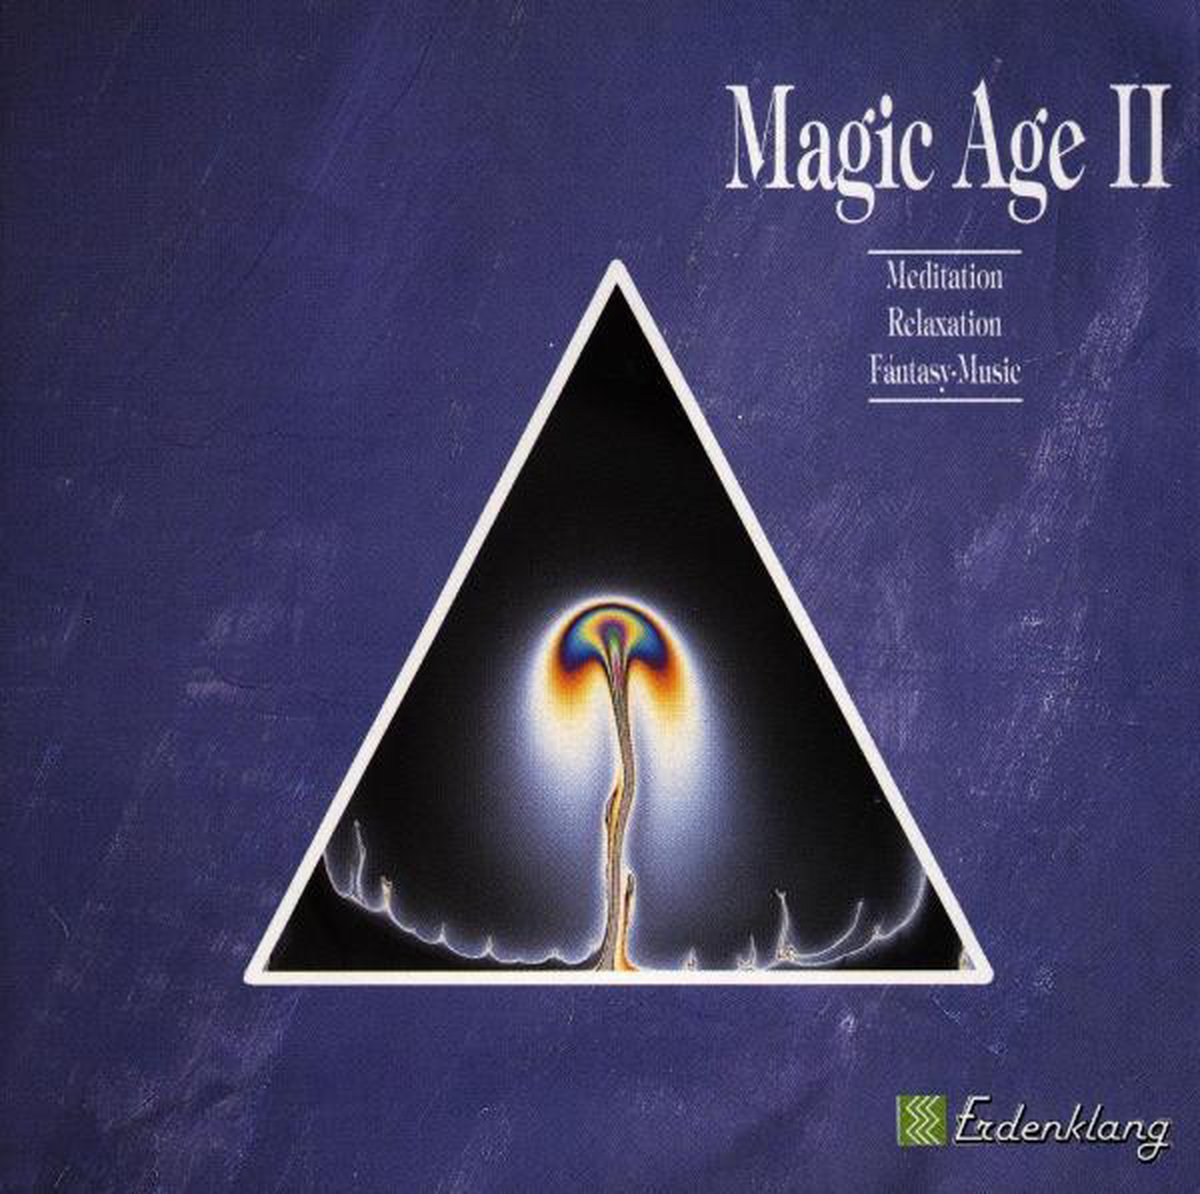 Magic Age II - various artists